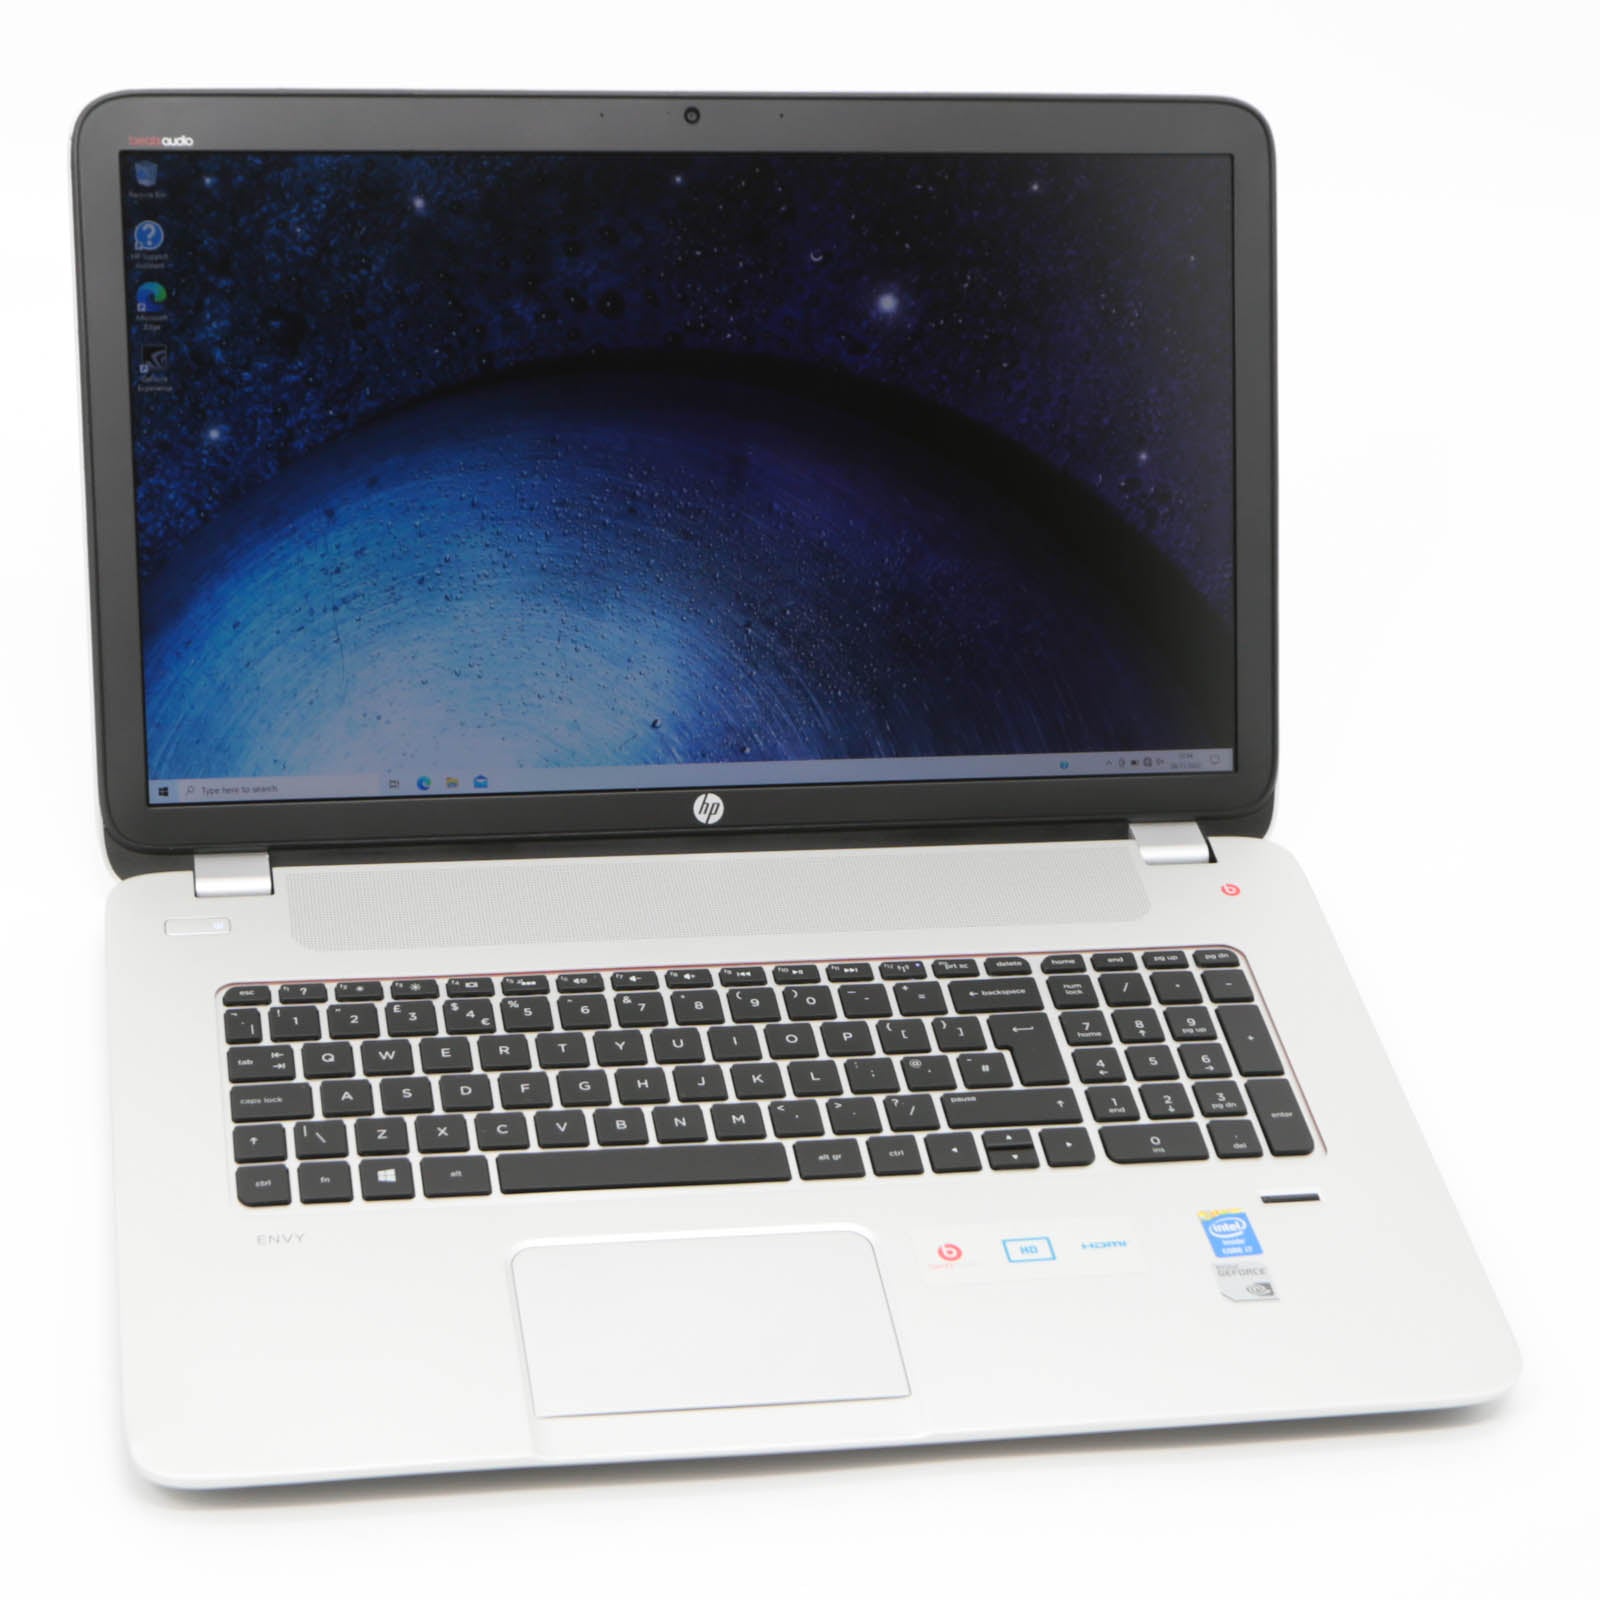 HP Envy 17 Laptop: Core i7-4700MQ, 12GB RAM, 480GB SSD, NVIDIA